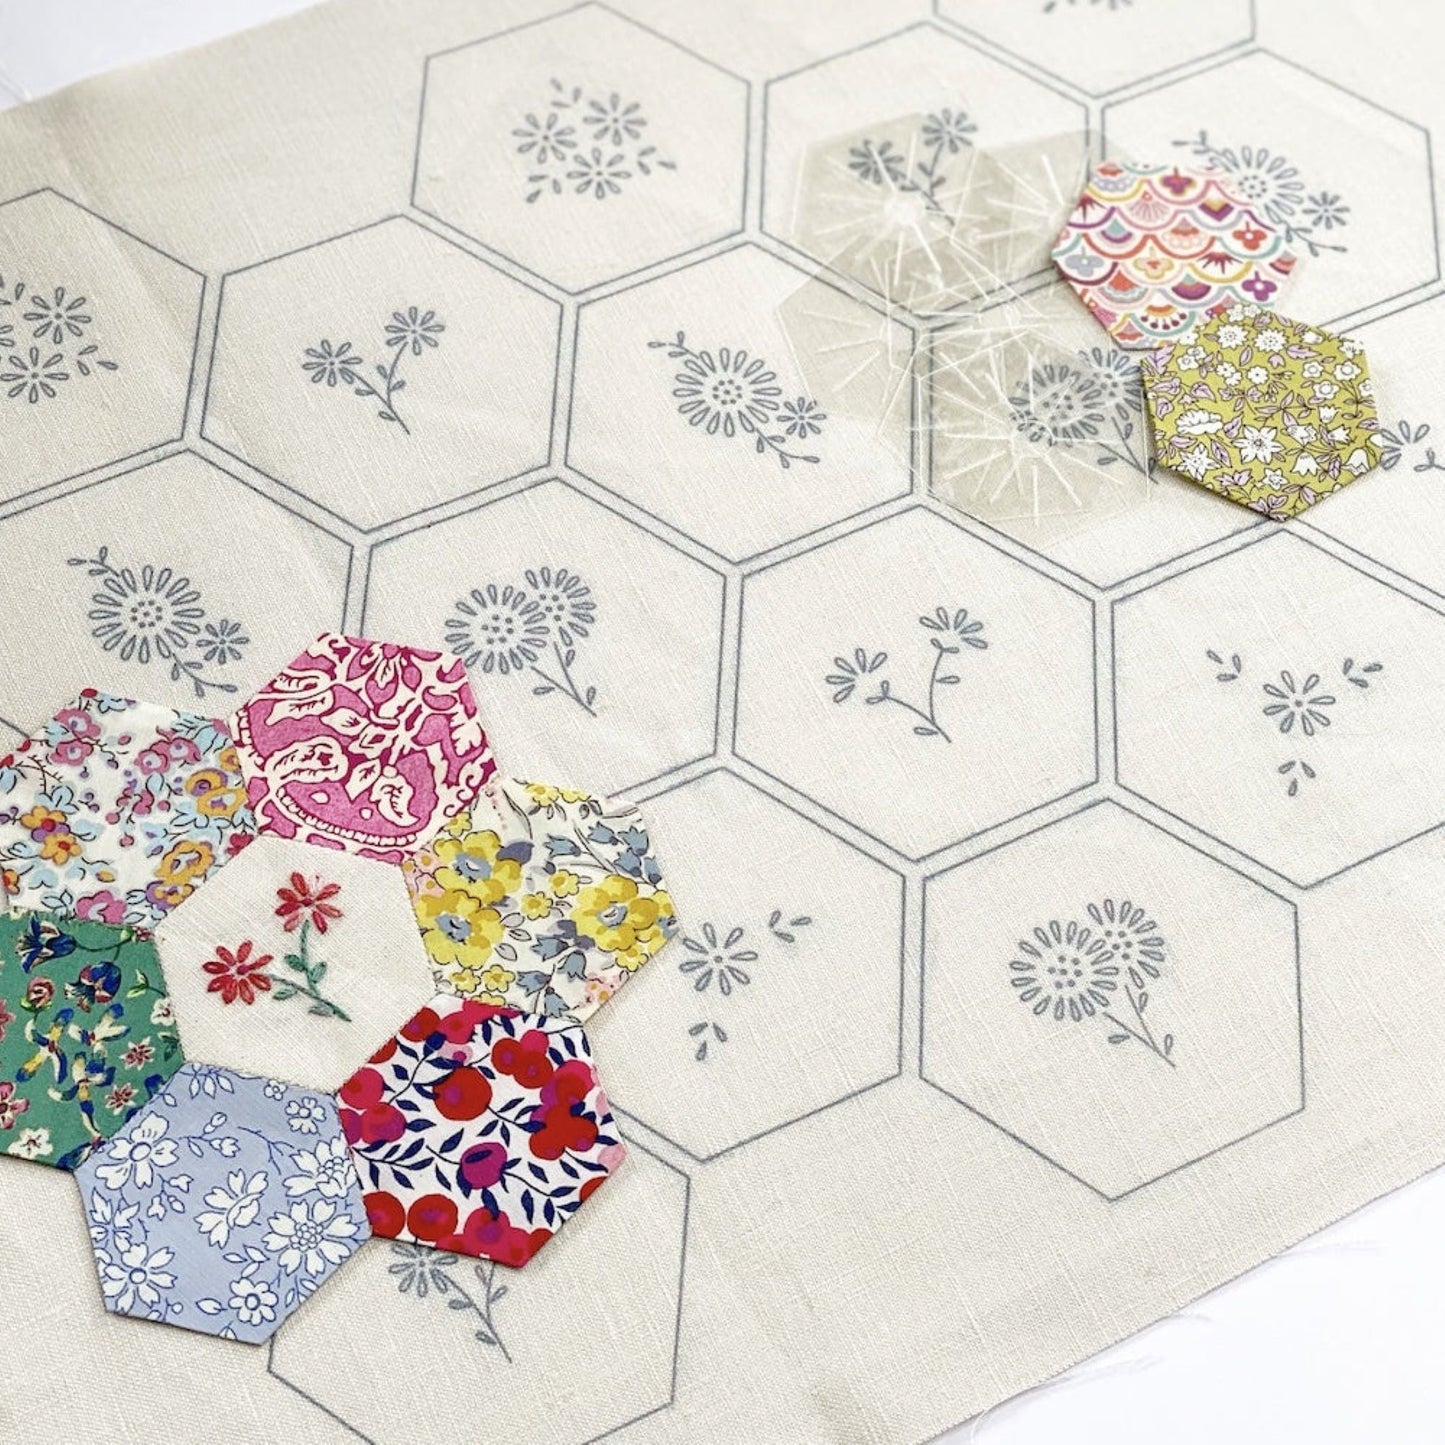 Daisy Hexies pre-printed cotton linen stitchery panel Amy Kallissa designs